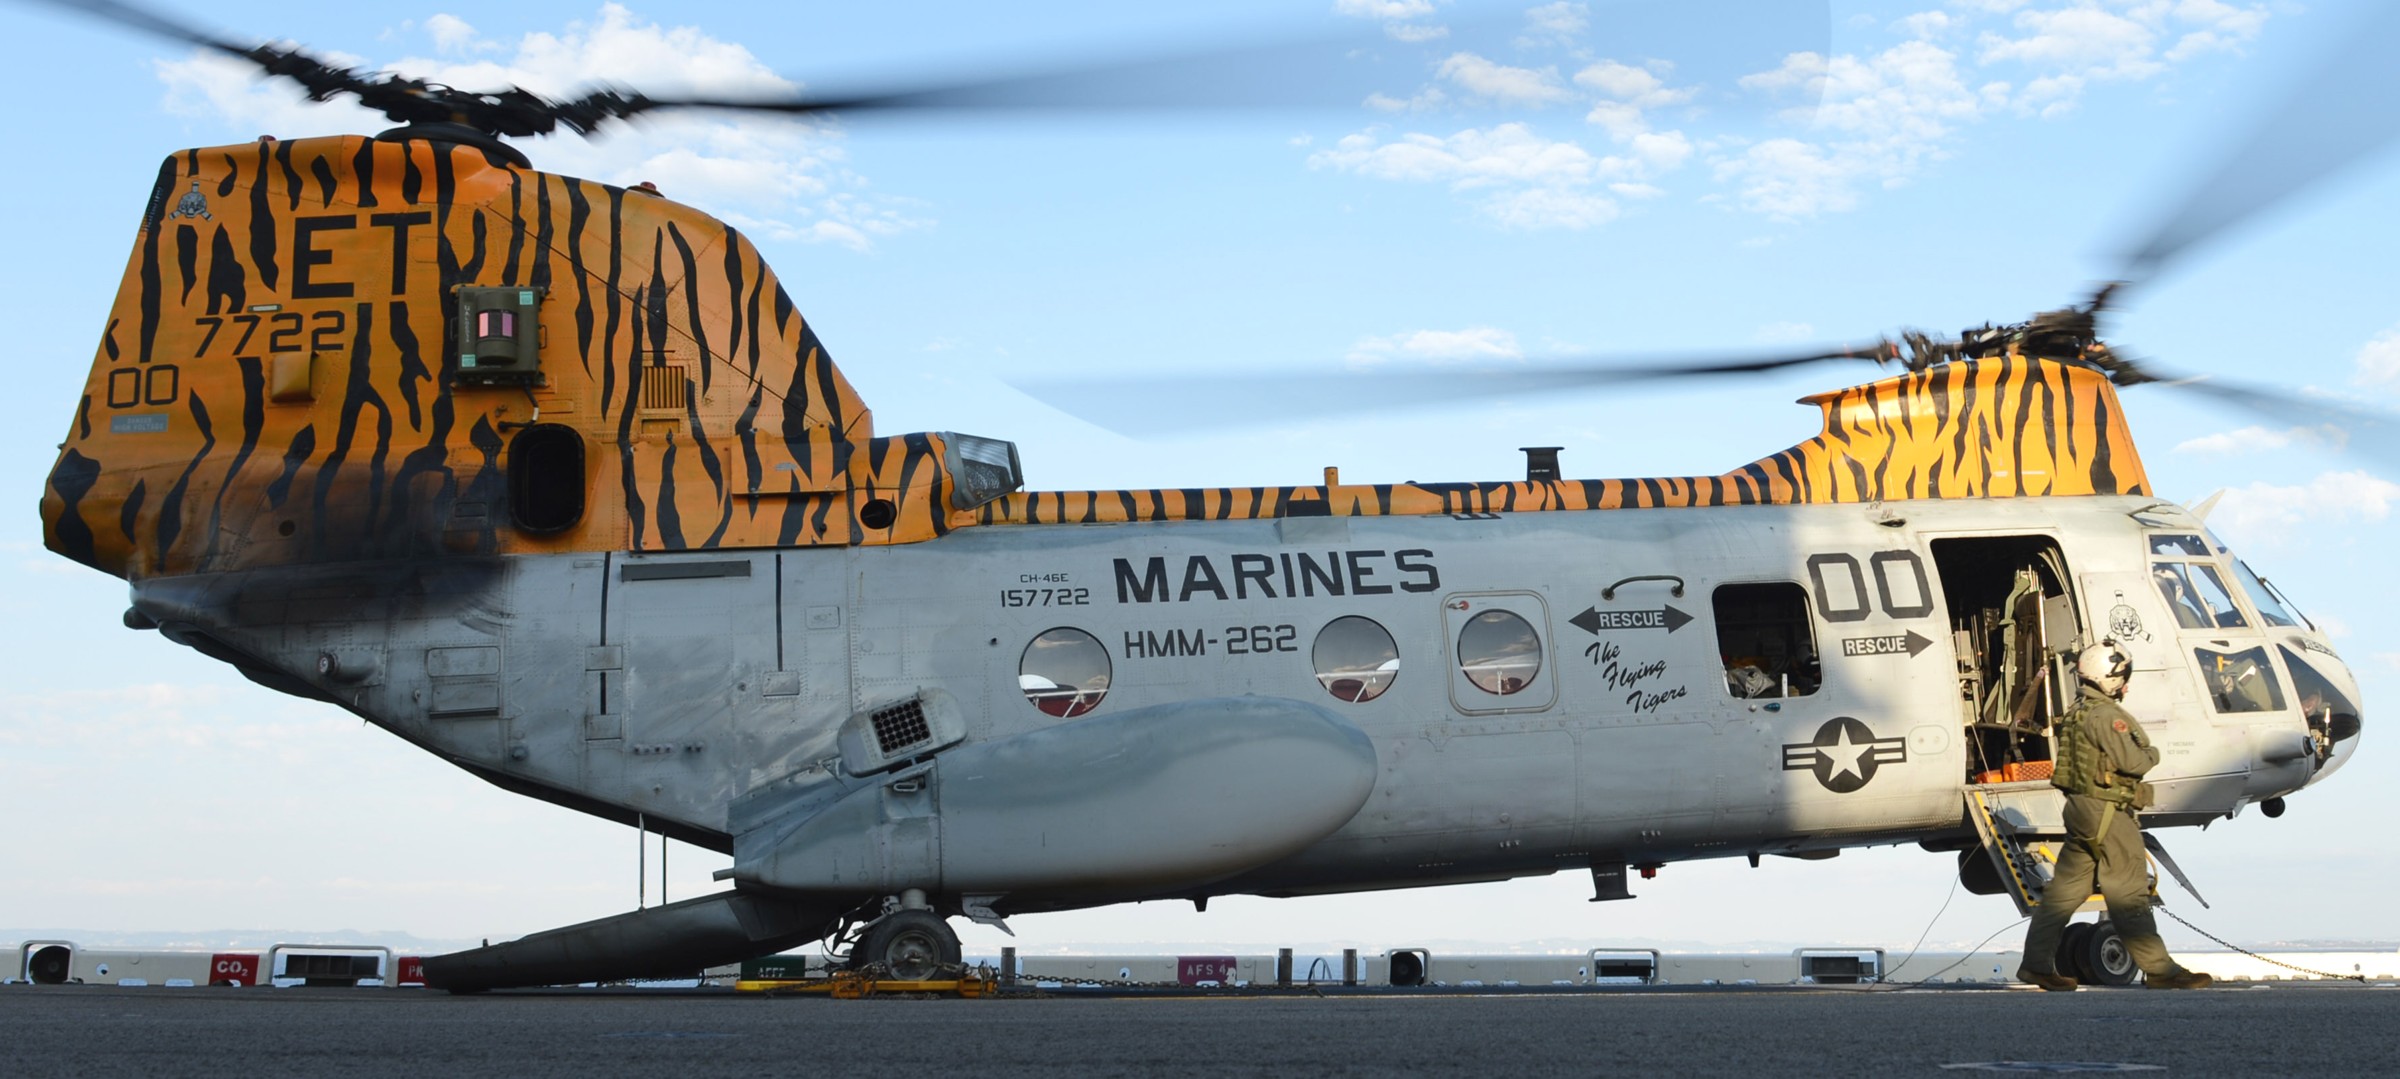 hmm-262 flying tigers ch-46e sea knight marine medium helicopter squadron usmc uss lha lhd japan 06x